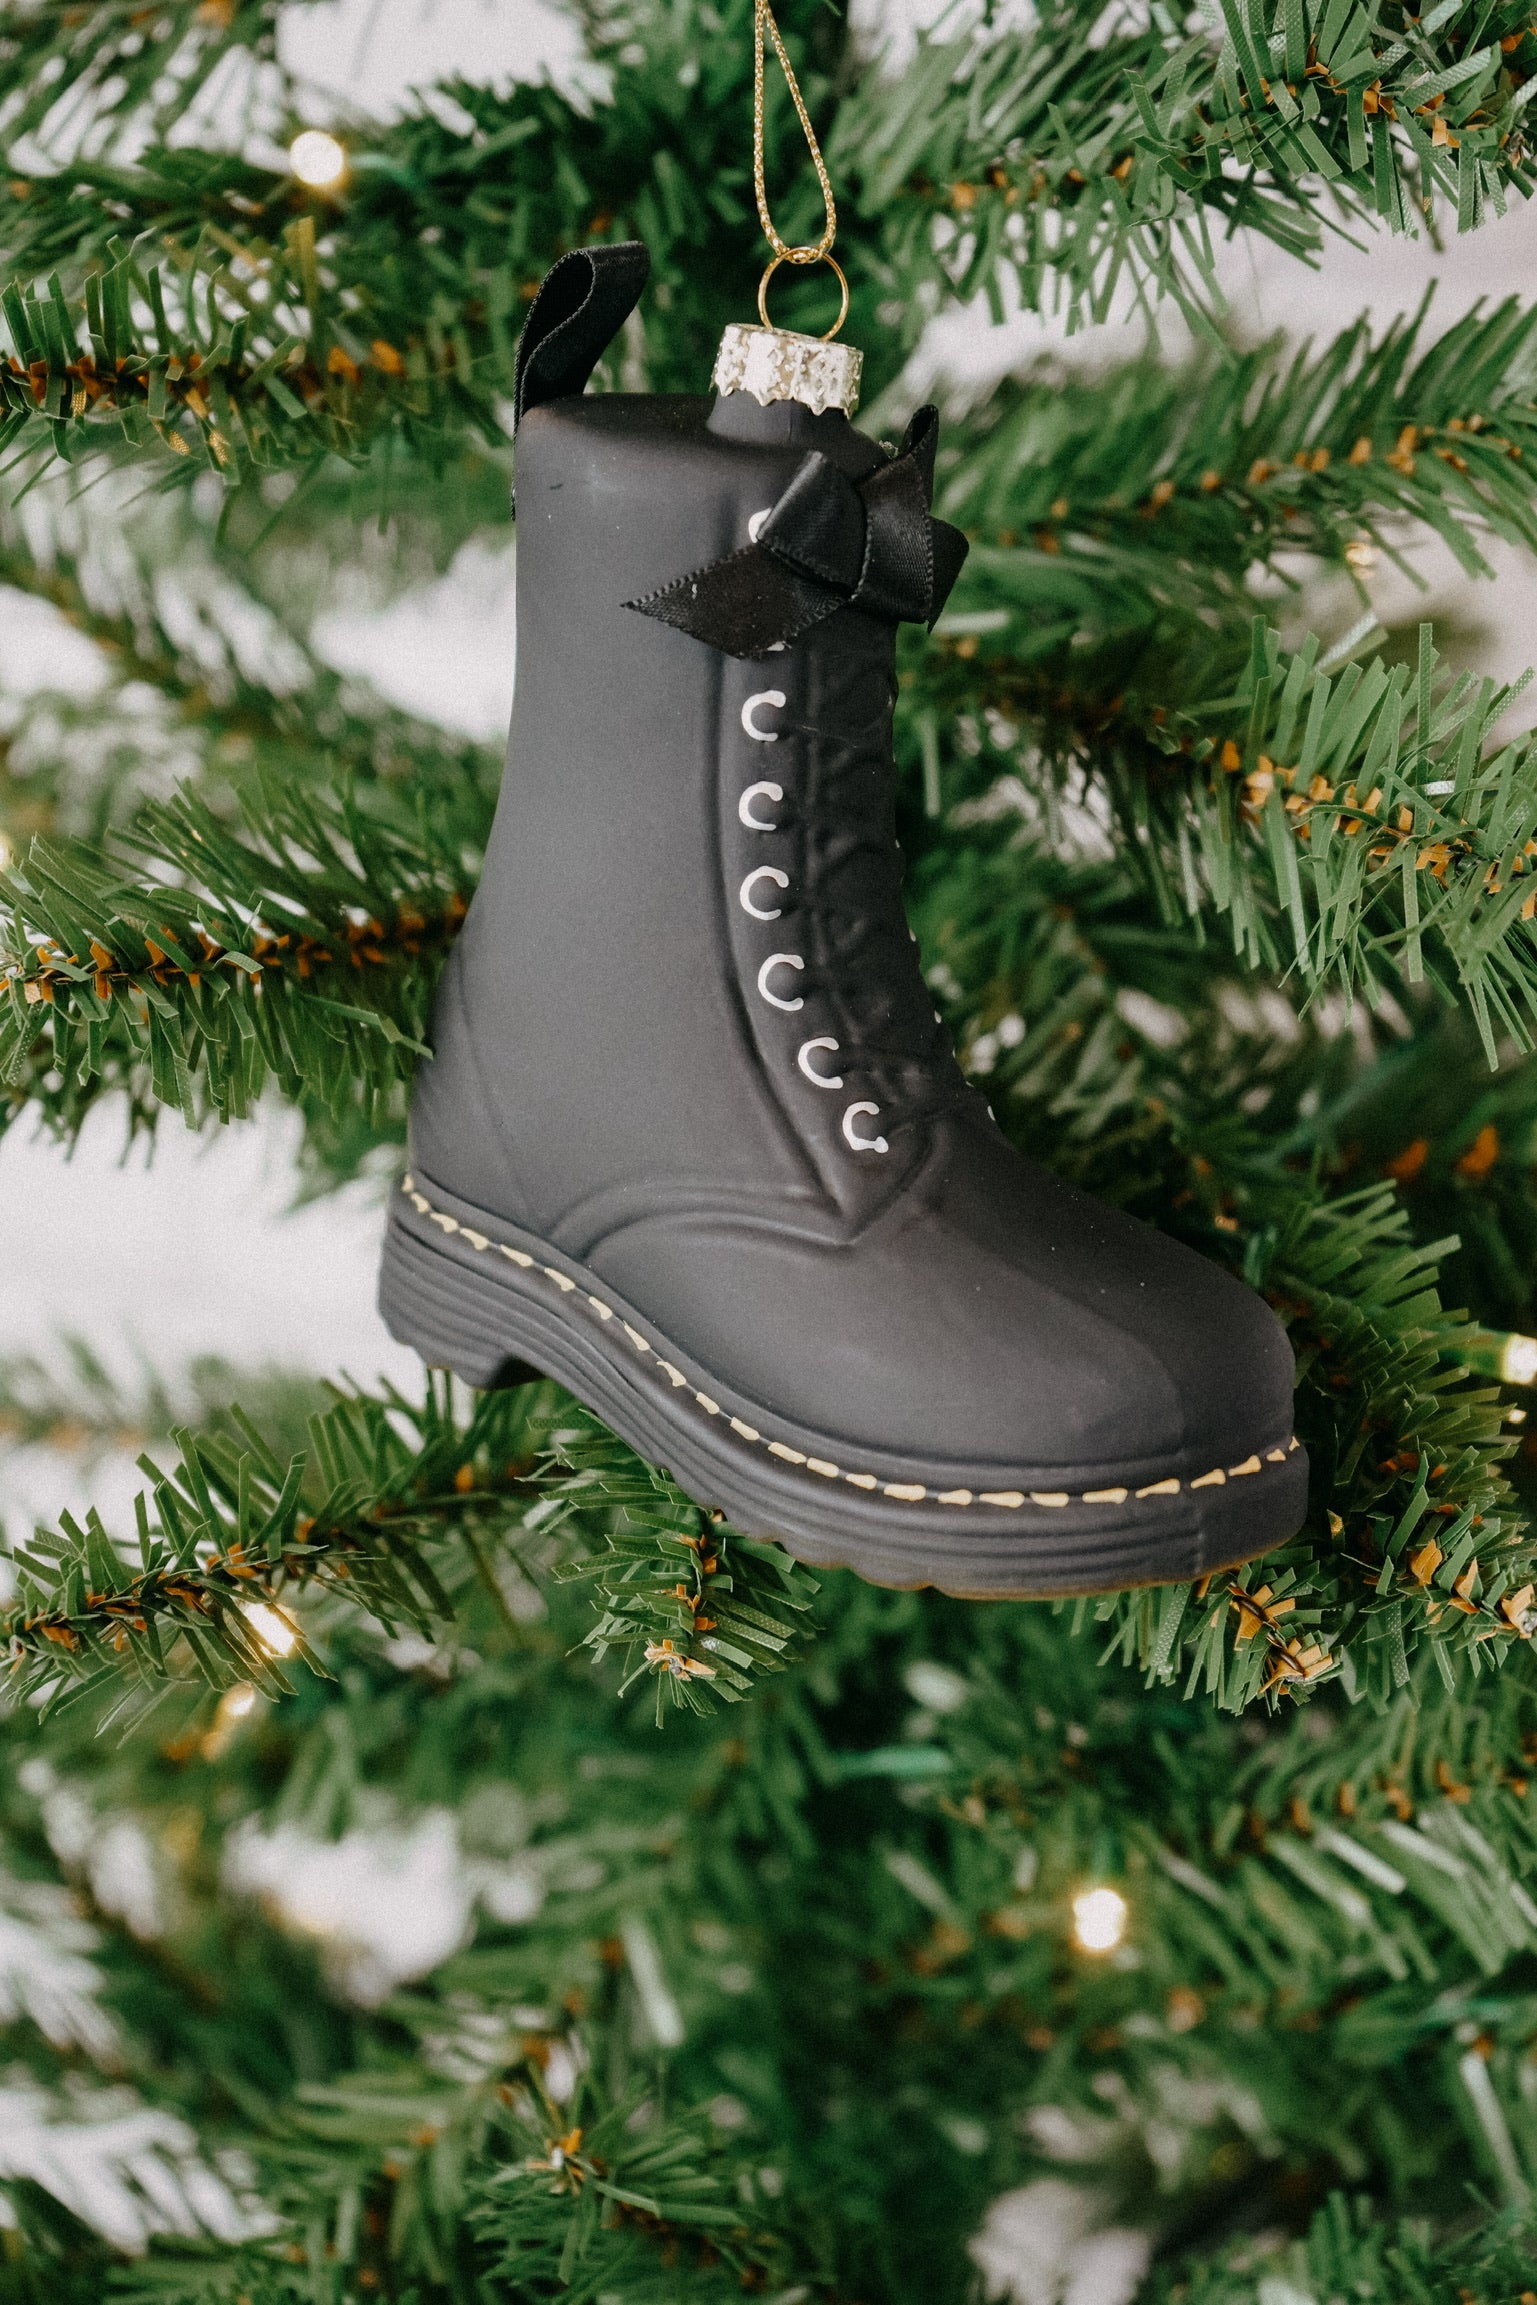 Grunge Boot Ornament